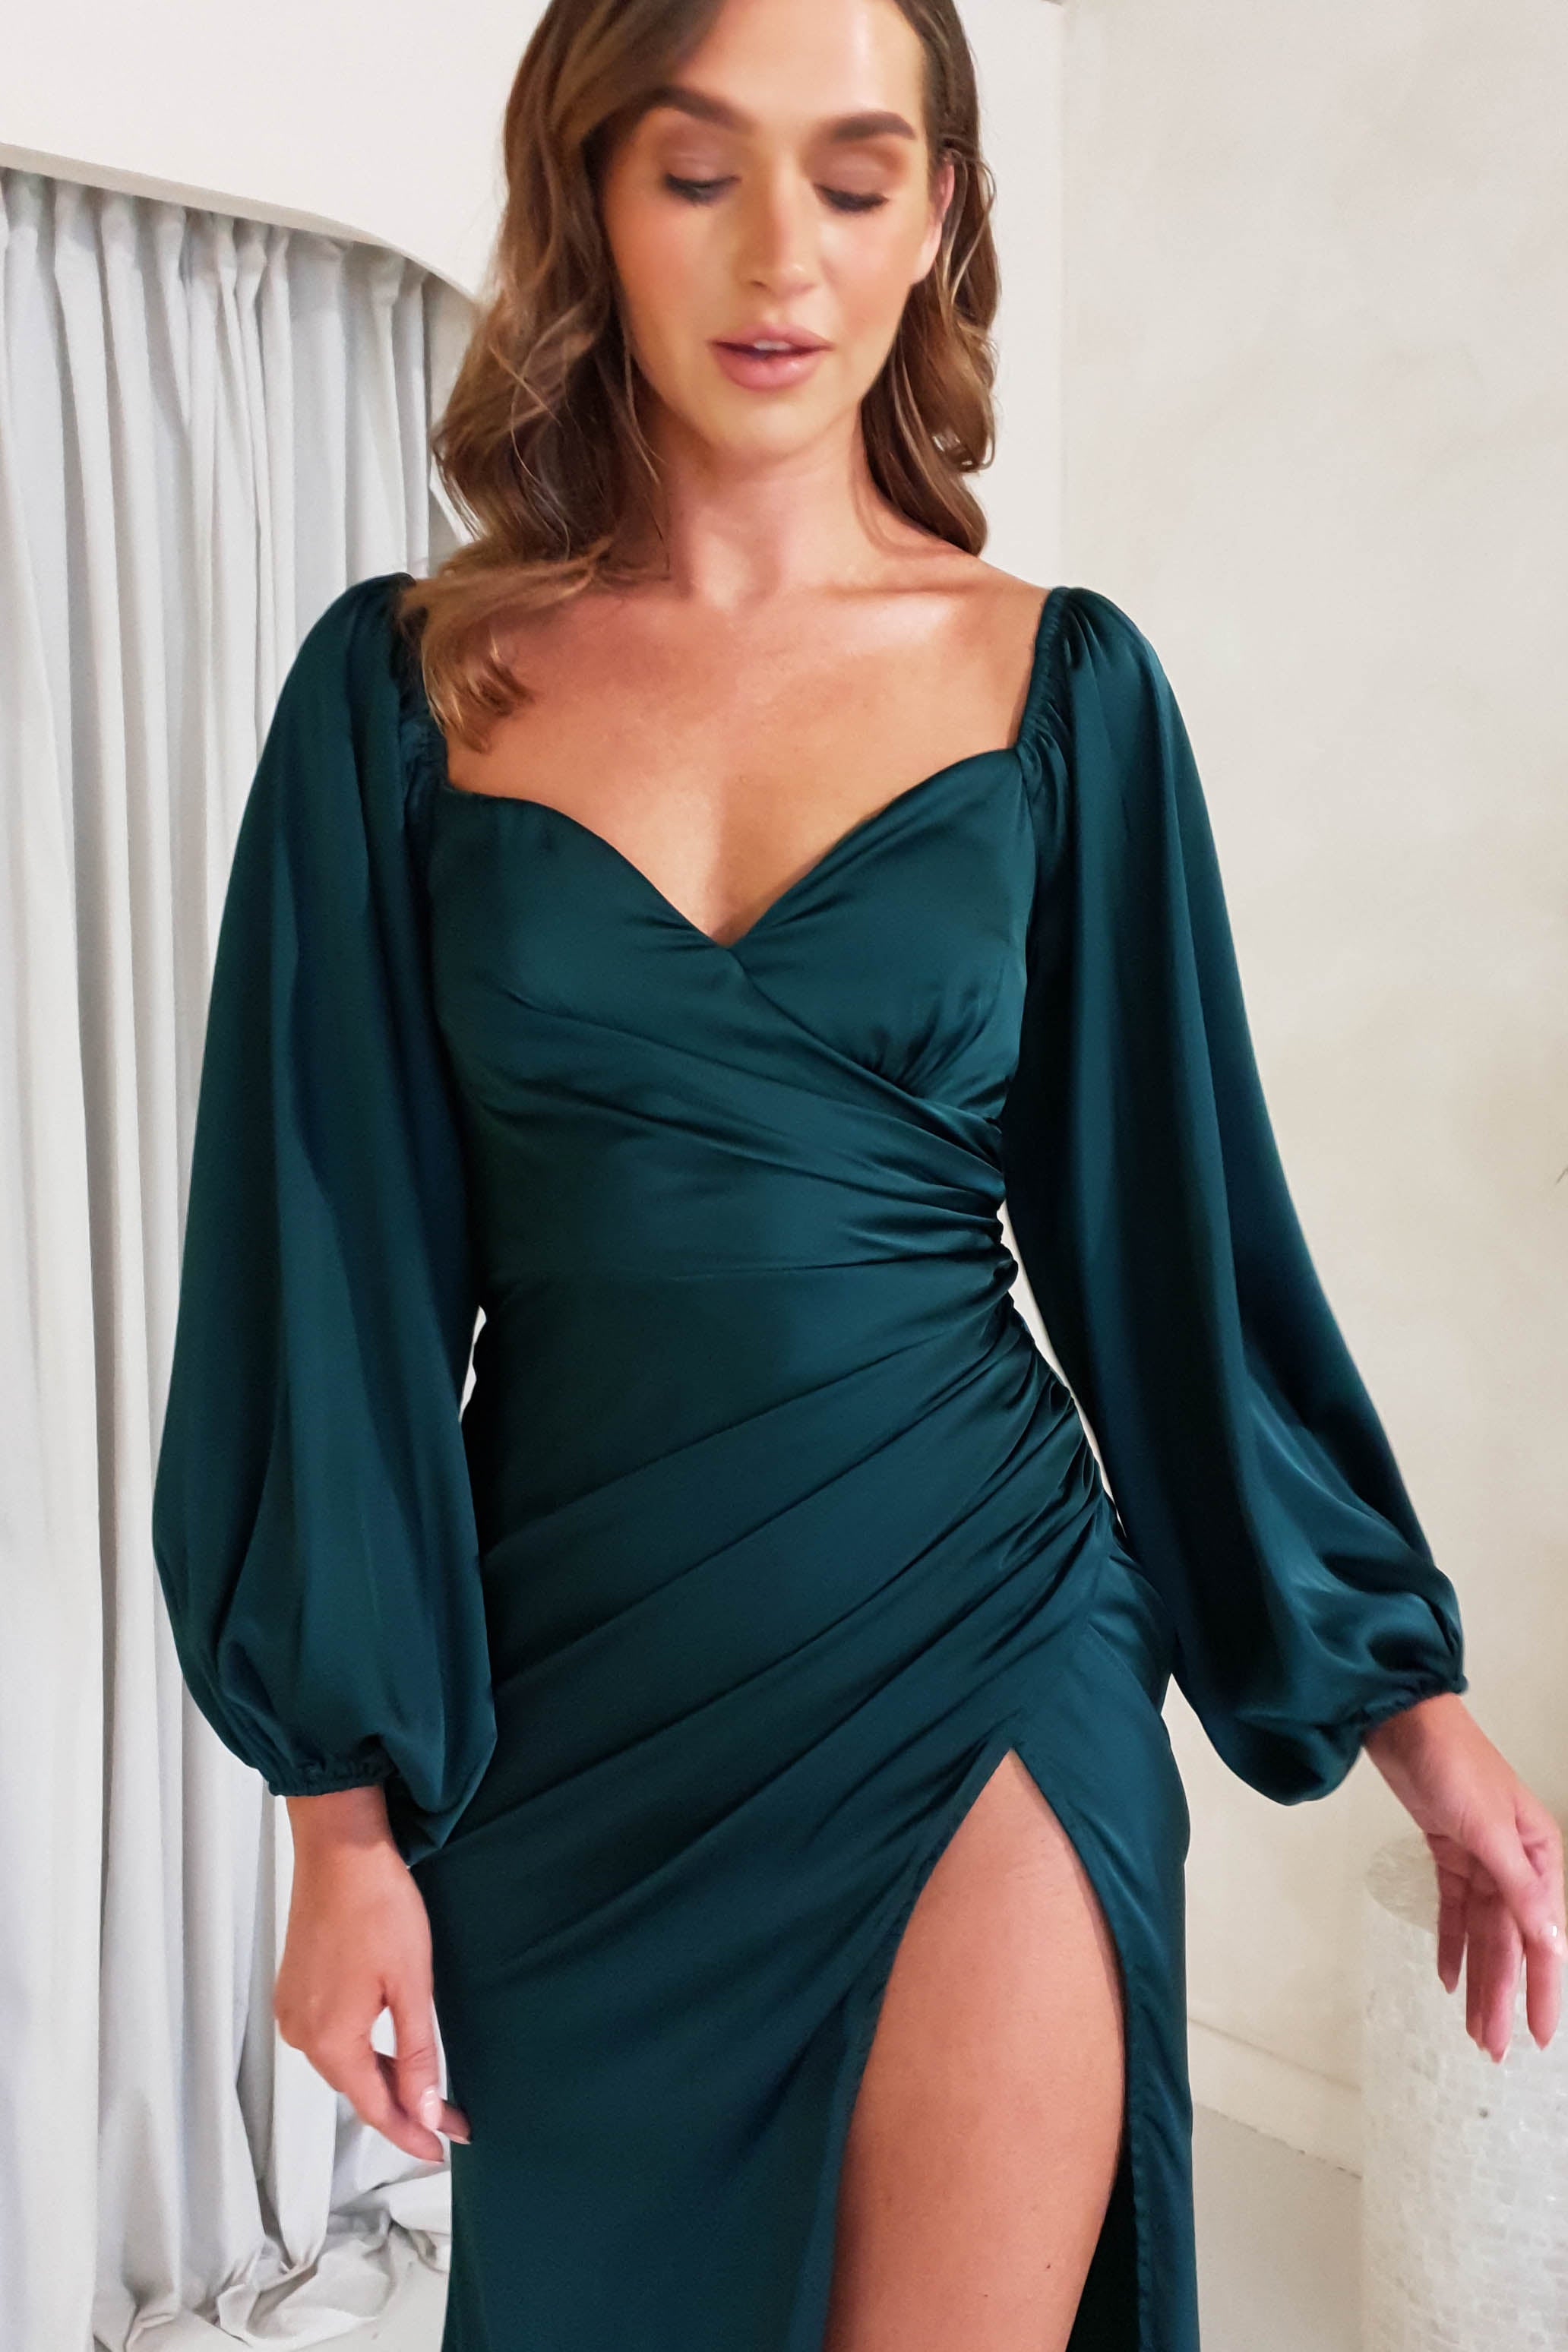 done-mf21903-green-gown-with-balloon-sleeves-emerald-green-maniju-dresses-51871880151381.jpg